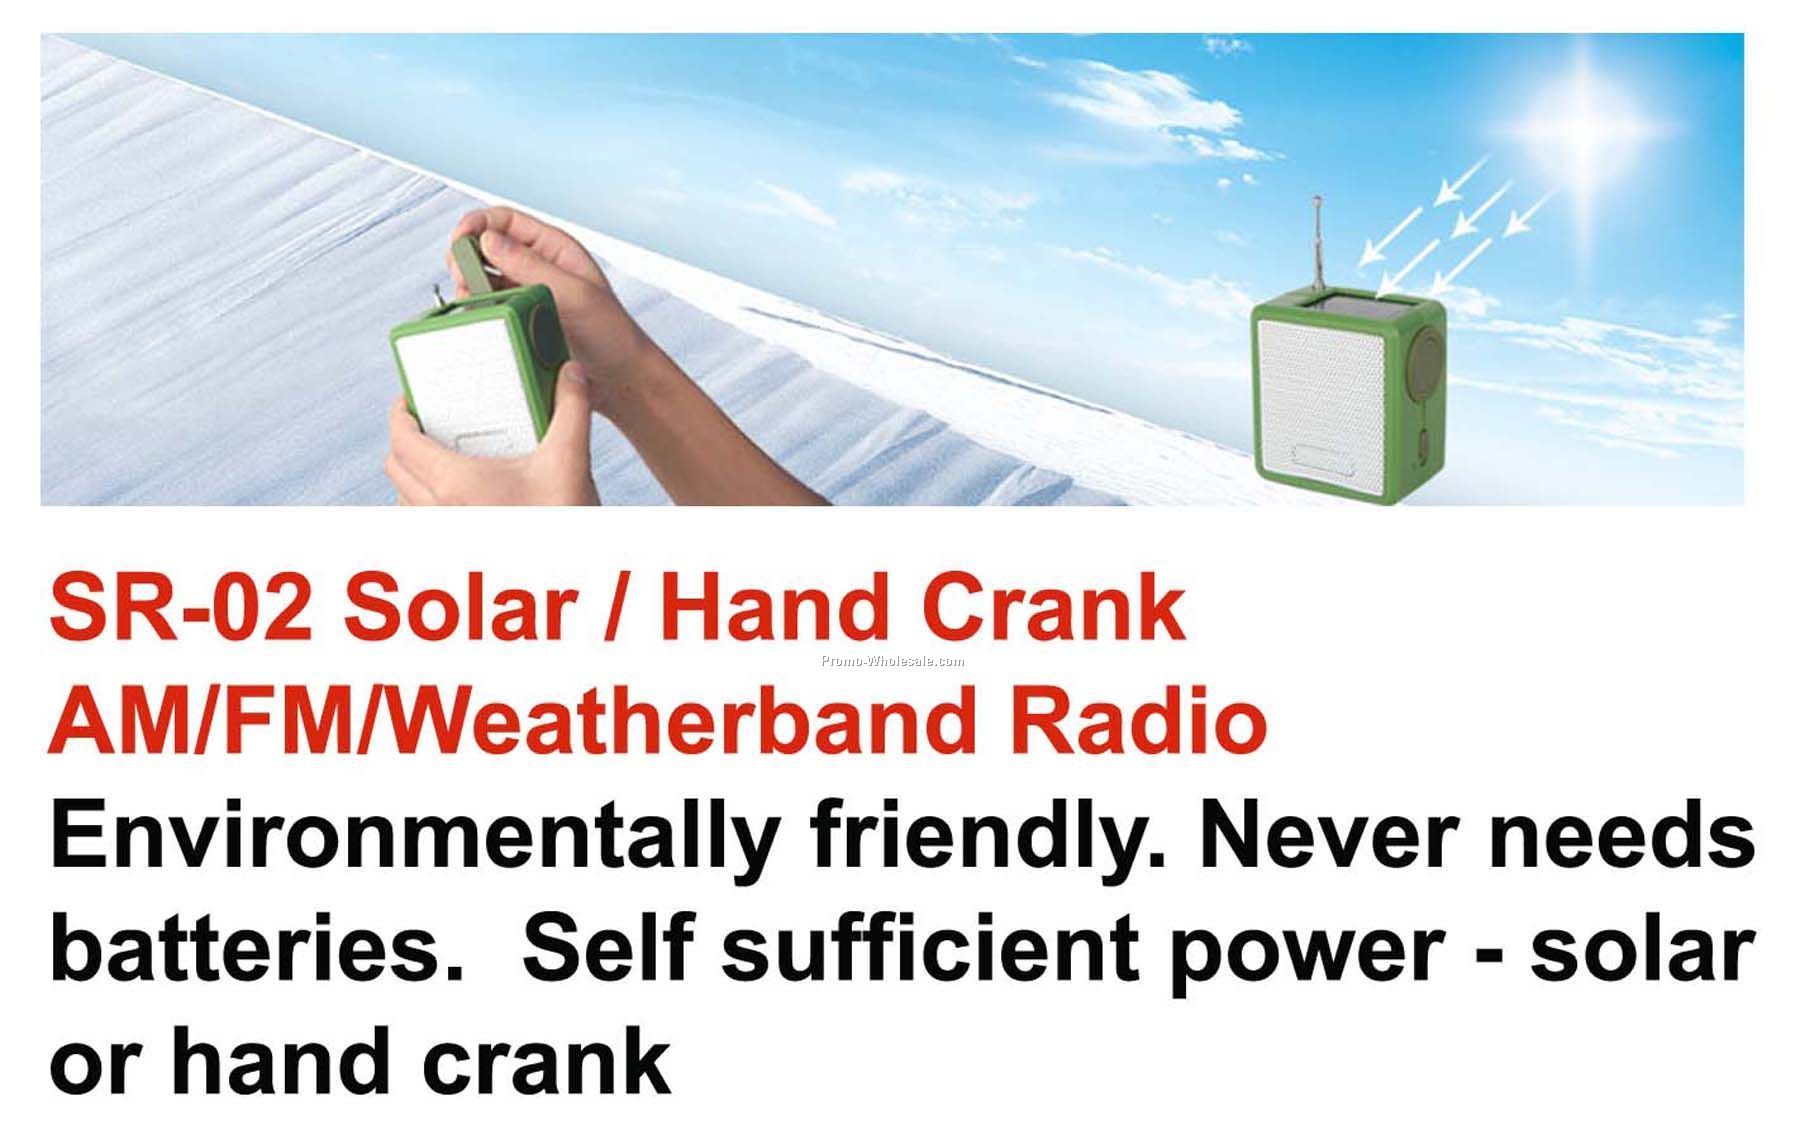 Solar Powered / Hand Crank AM/FM/Weatherband Radio